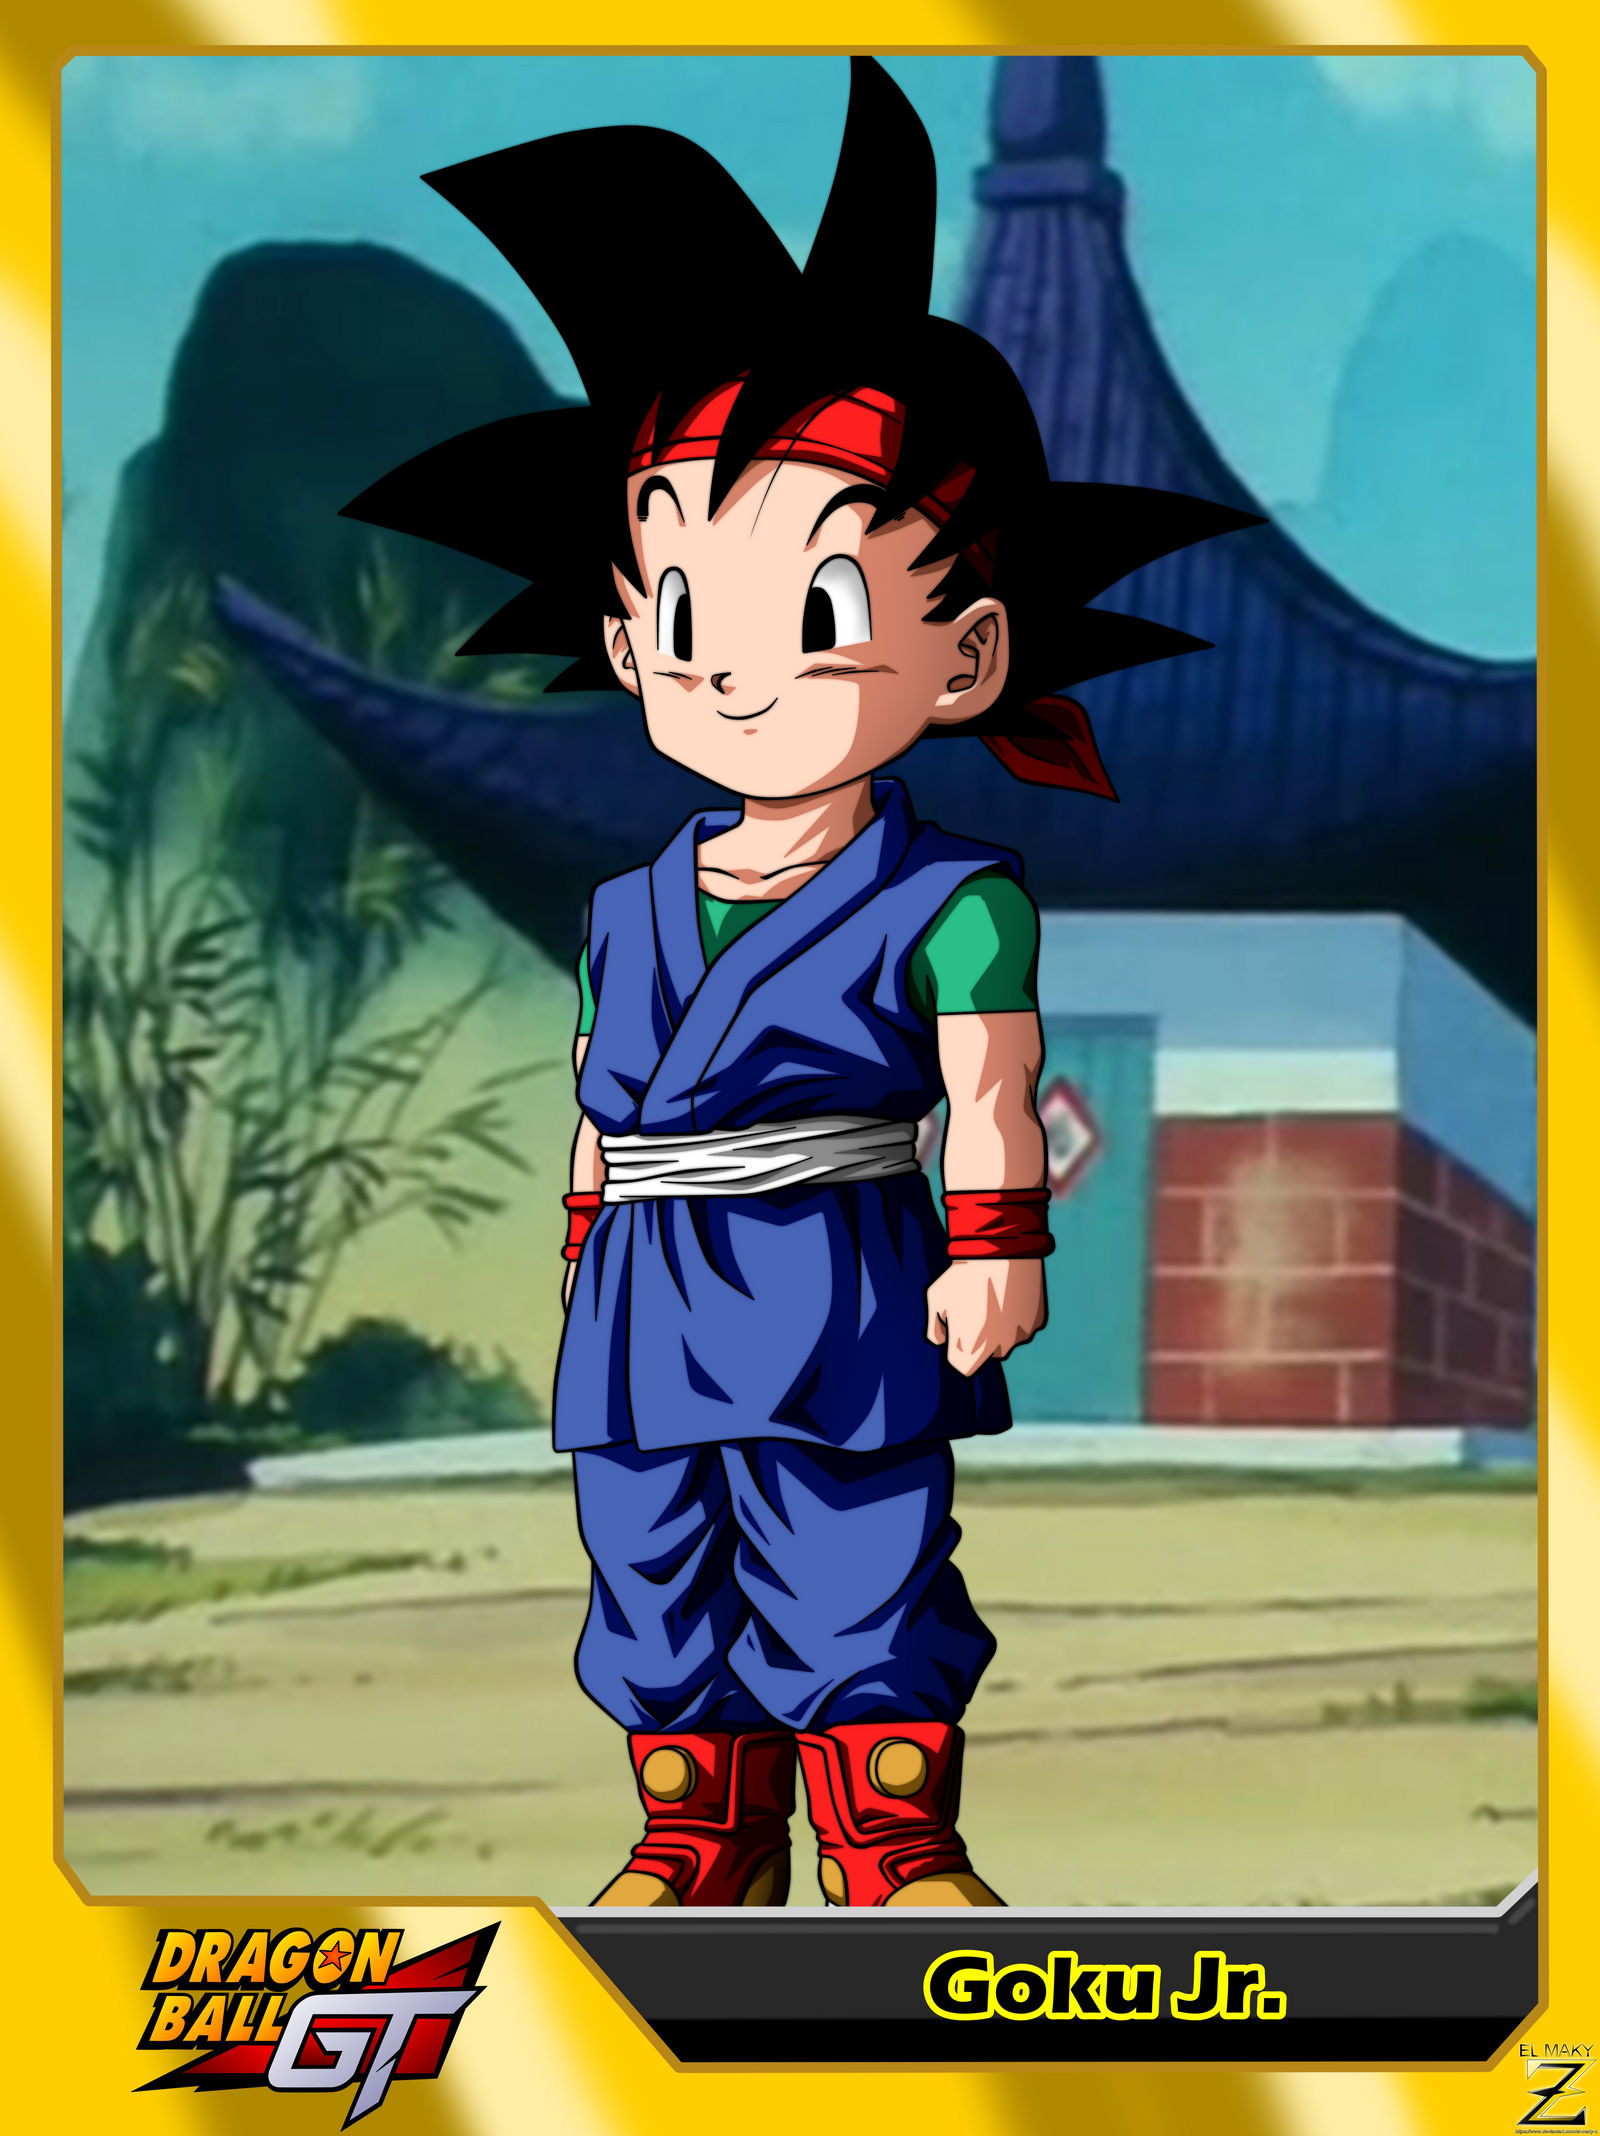 Dragon Ball GT) Goku Jr. by el-maky-z on DeviantArt